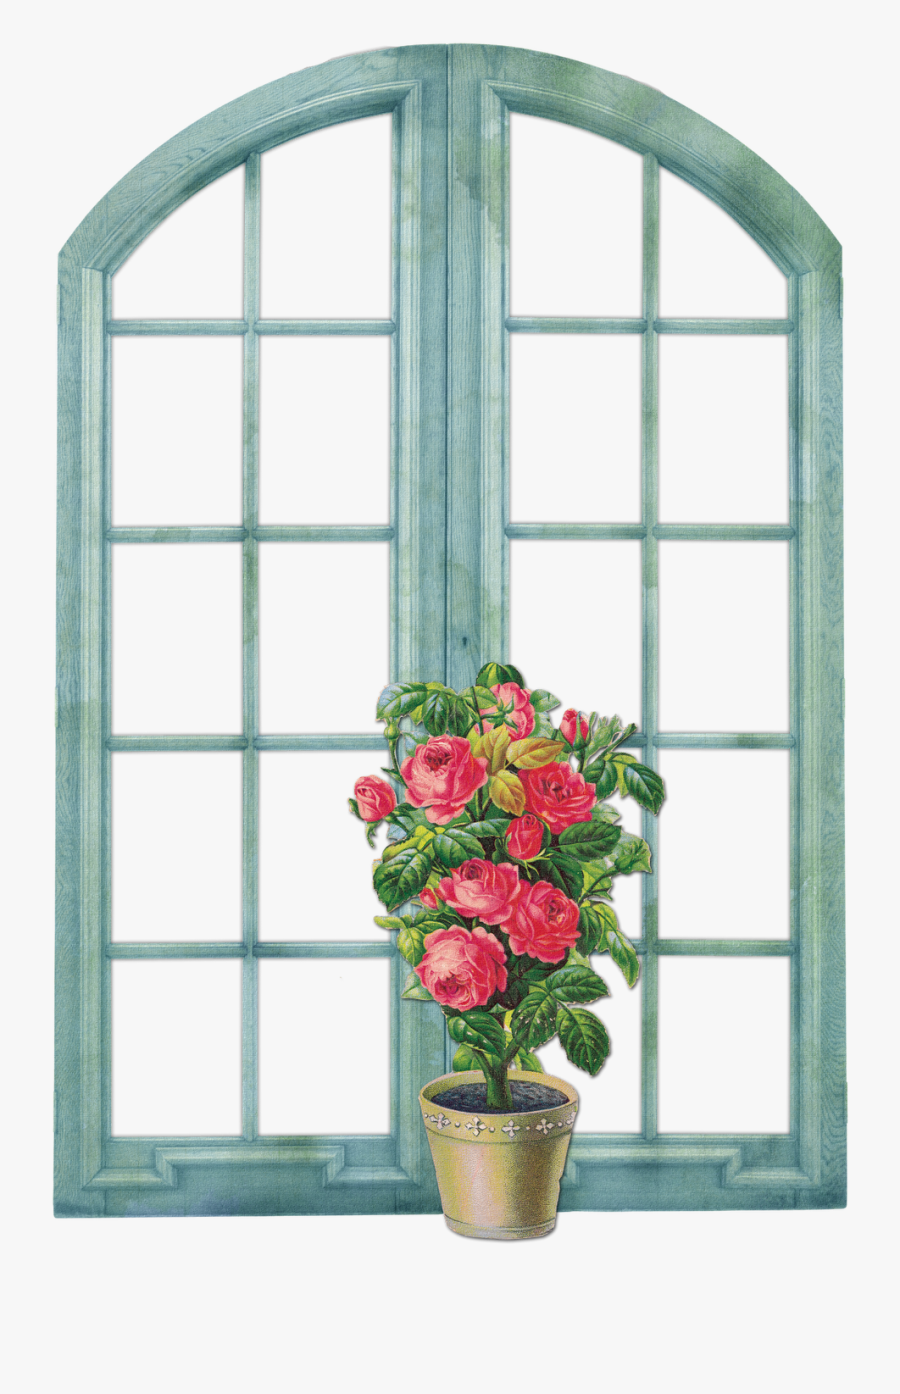 Floral Theme Crafting Pinterest - Ventana Png, Transparent Clipart